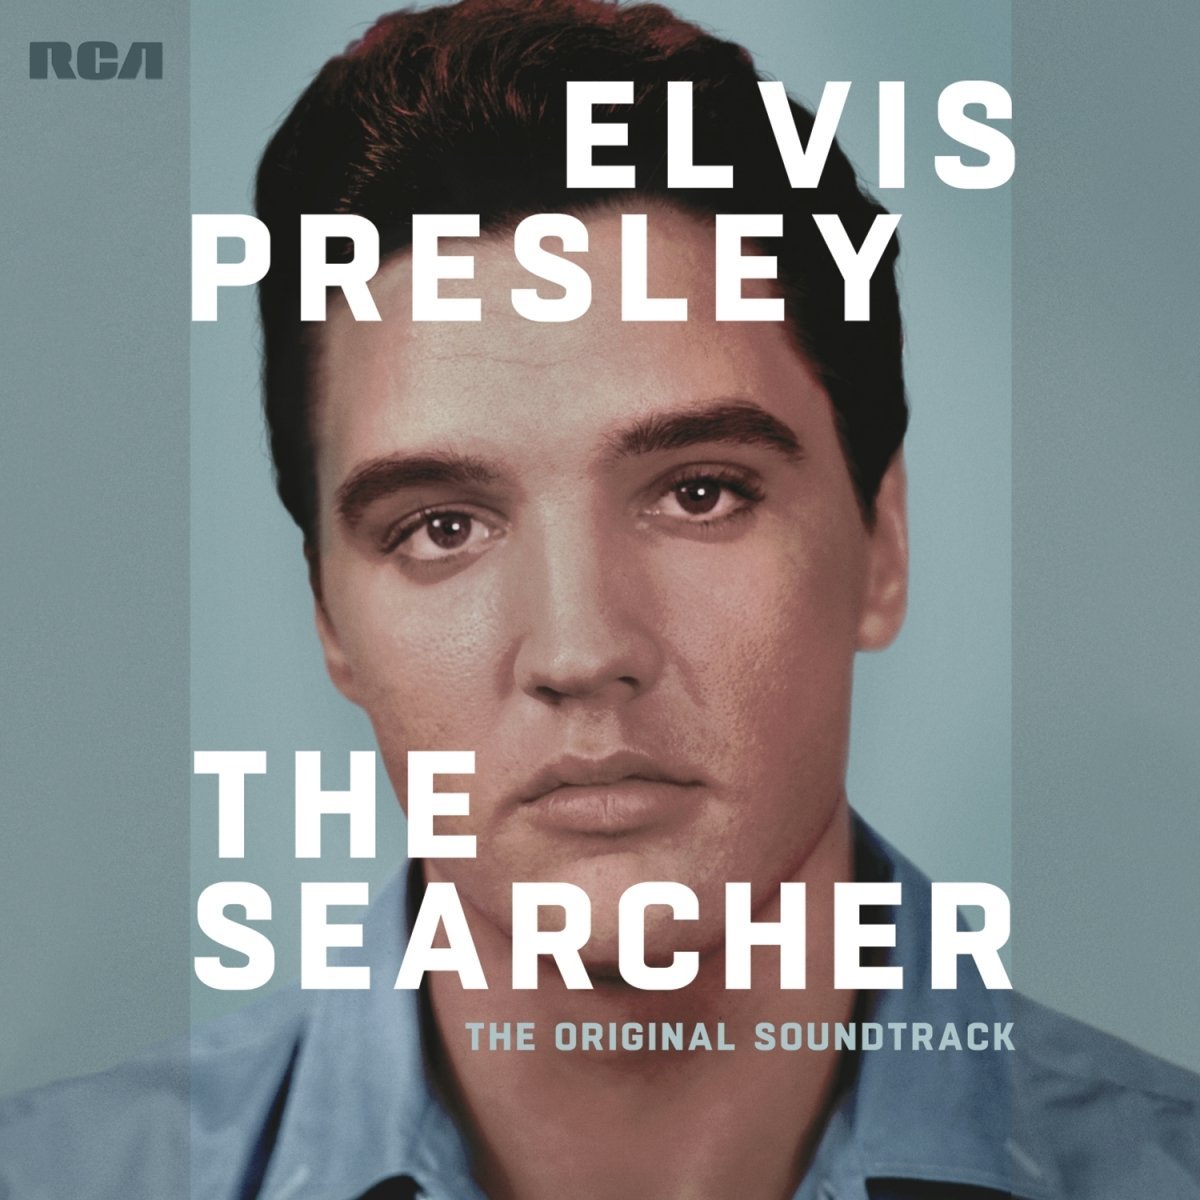 ELVIS PRESLEY: THE SEARCHER (THE ORIGINAL SOUNDTRACK)